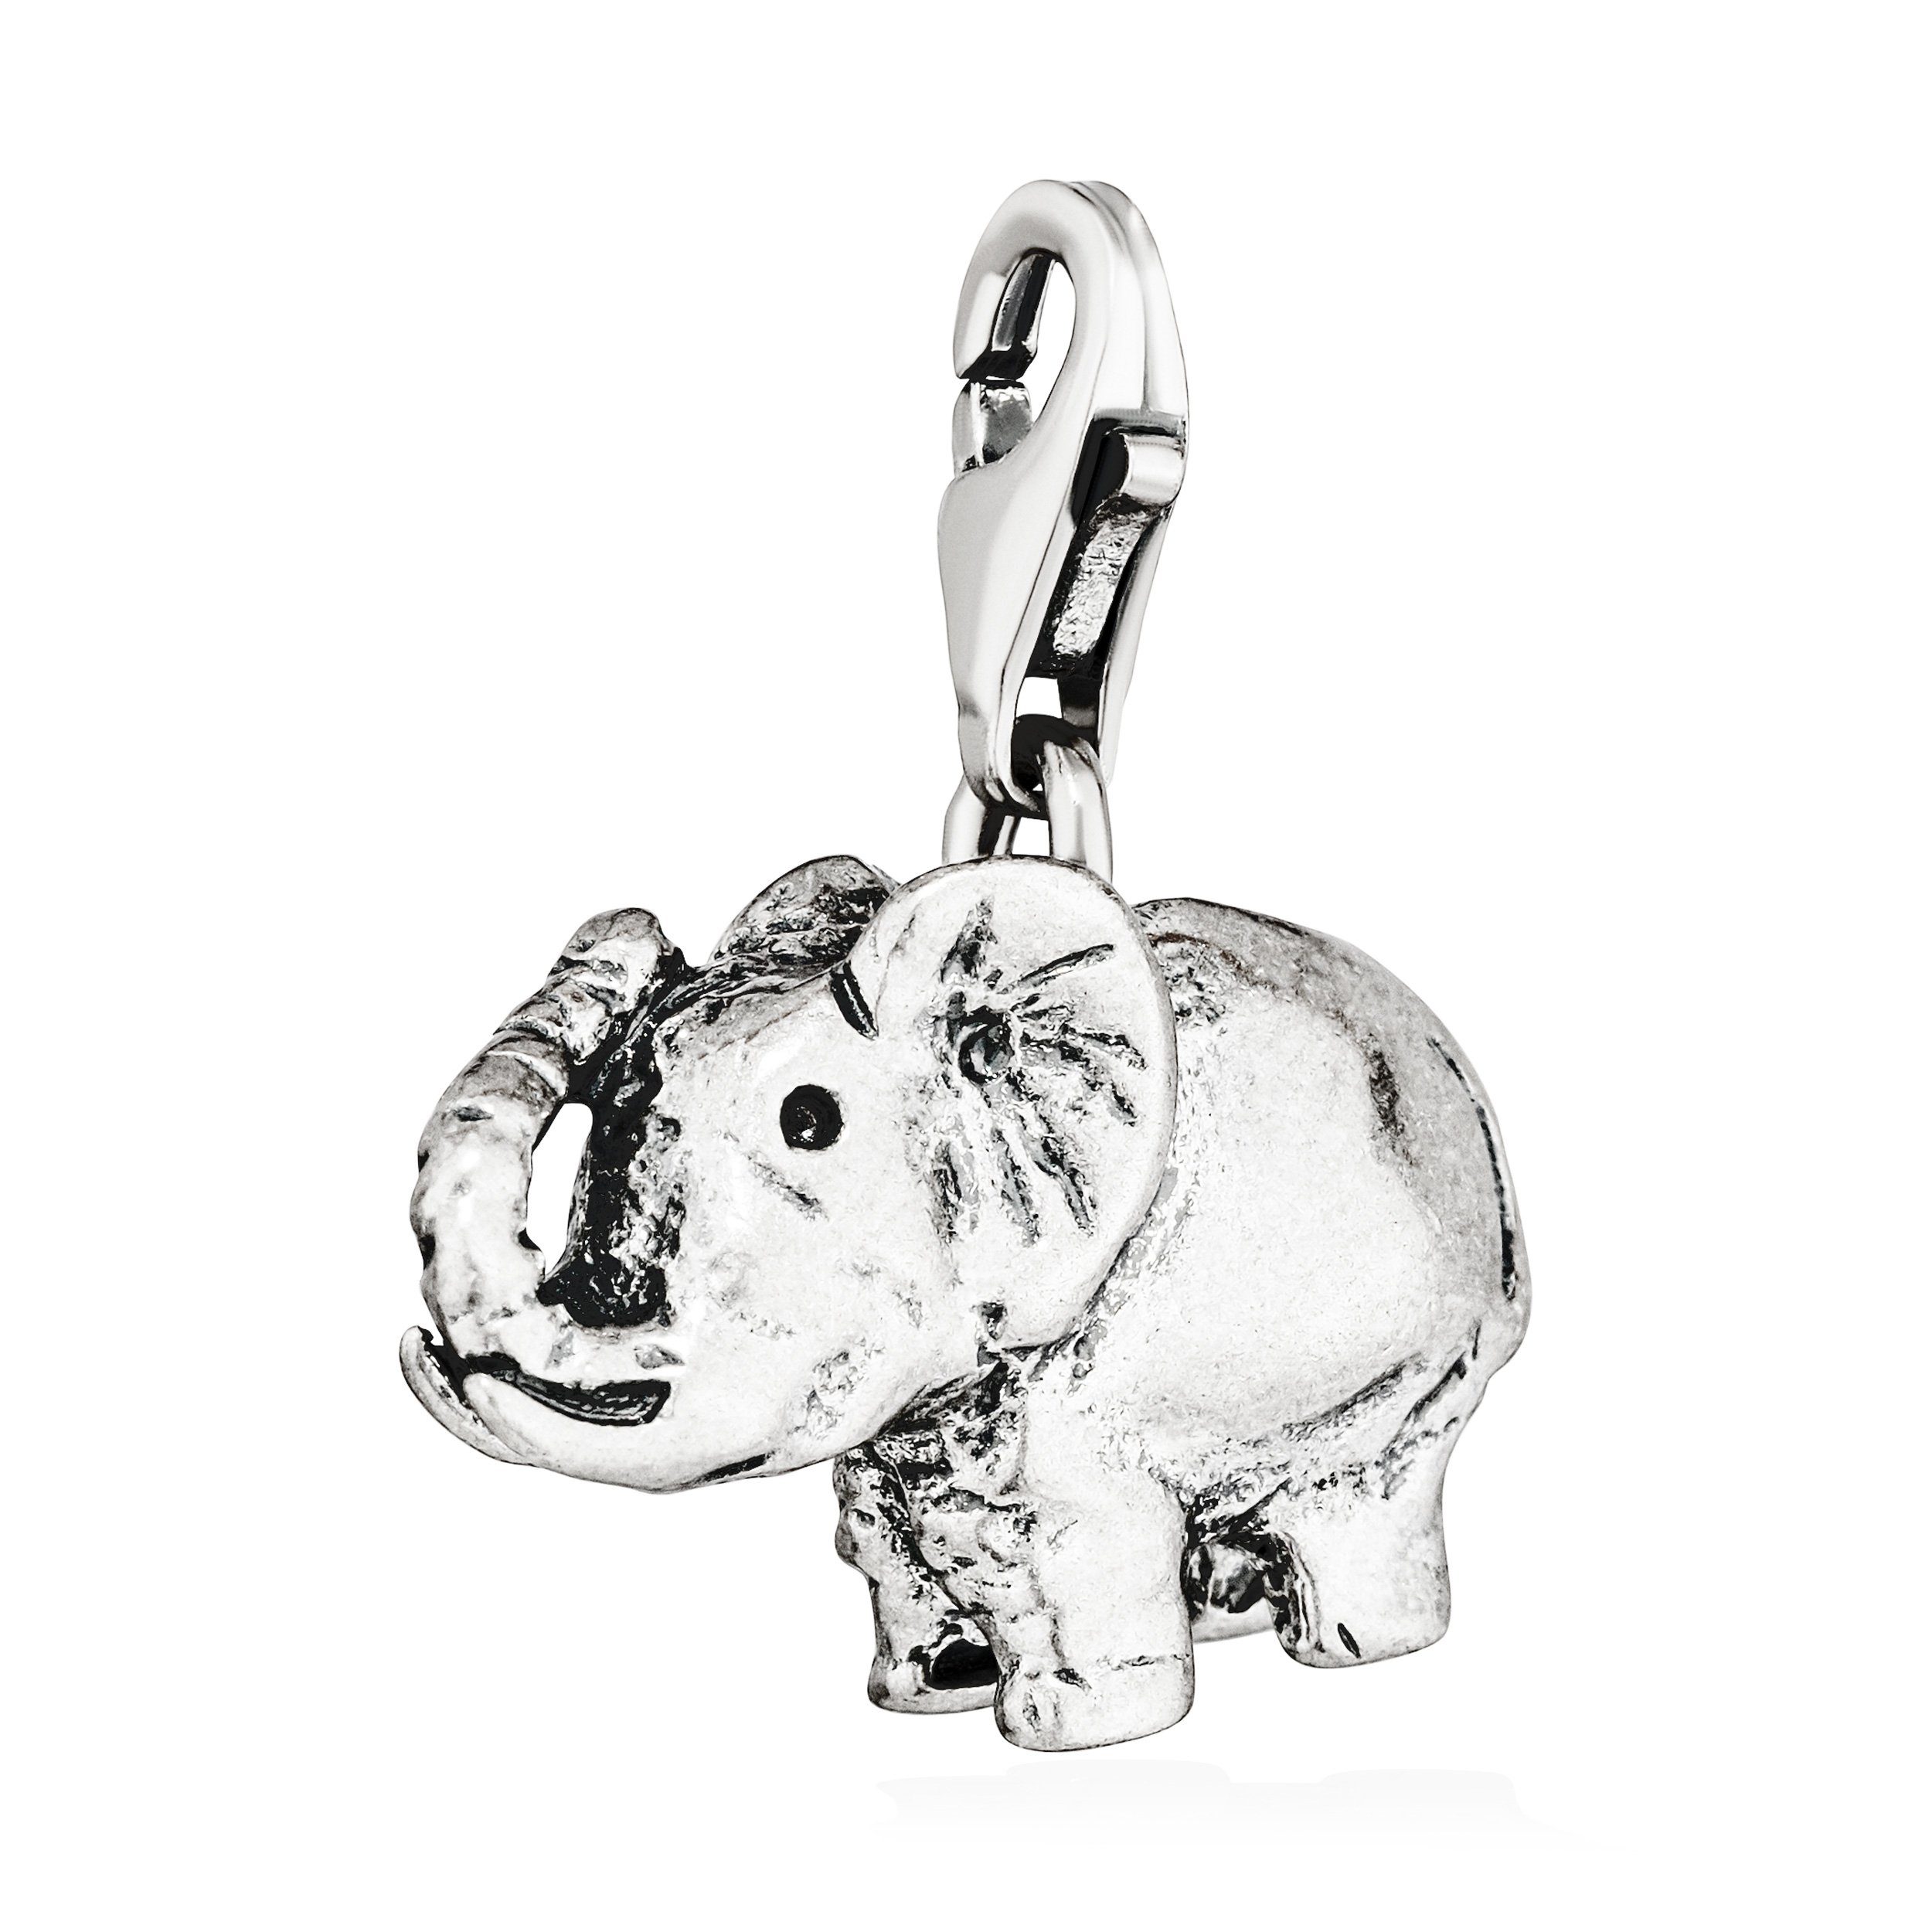 NKlaus Kettenanhänger Charm-Anhänger Elefant 925 14x17mm Silber Silberanhänger antik Amulett